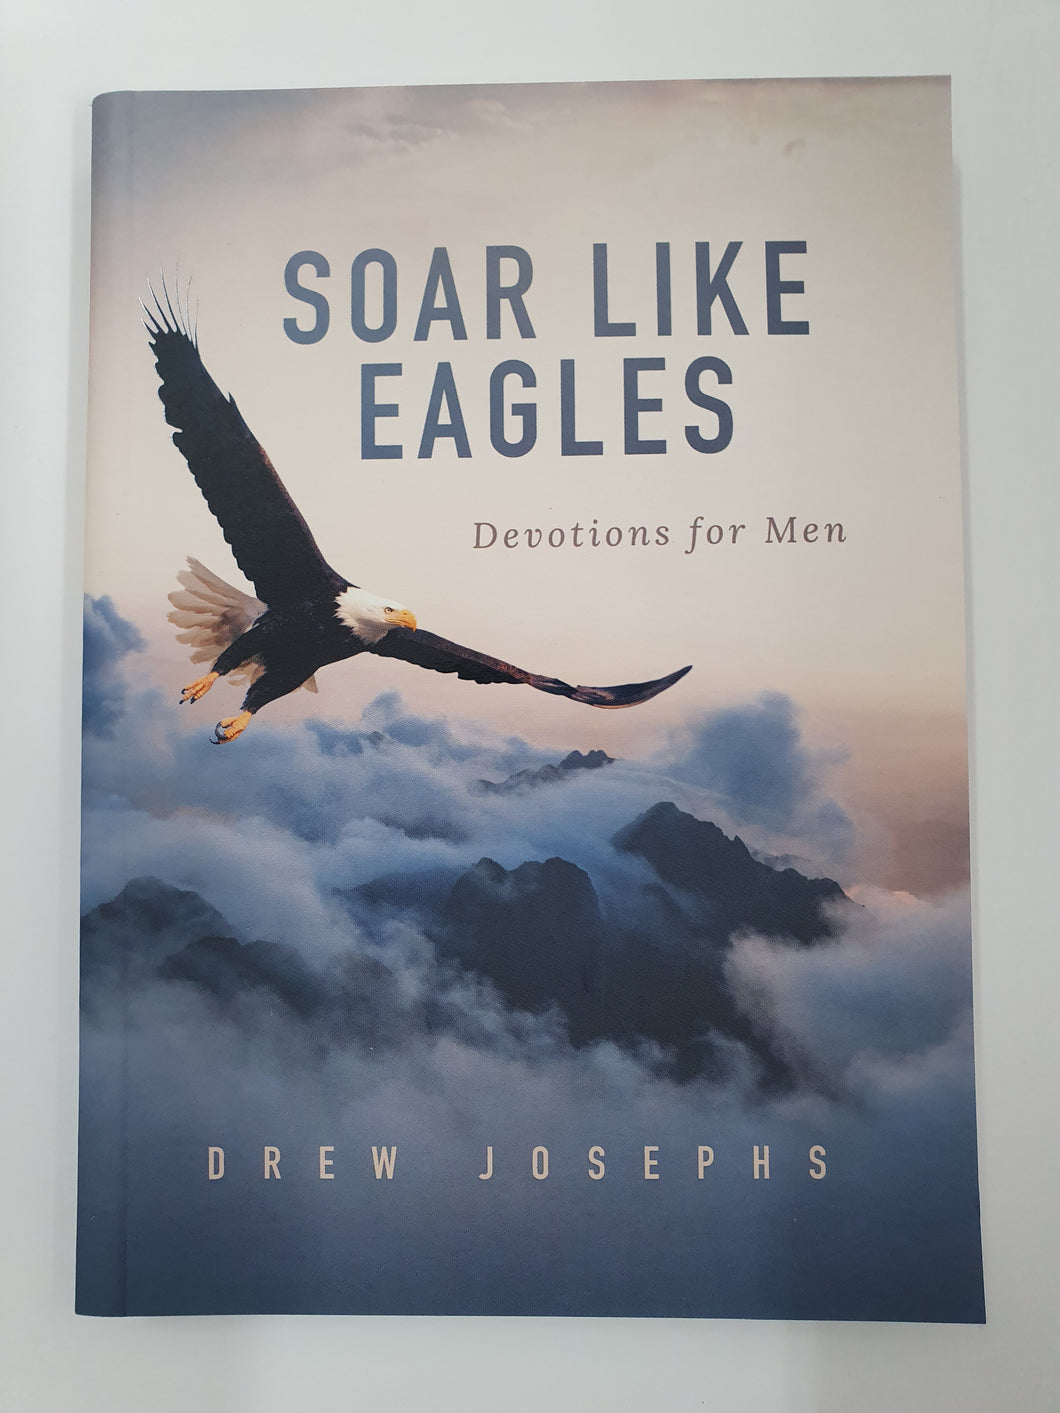 Sour Like Eagles - Devotions for Men